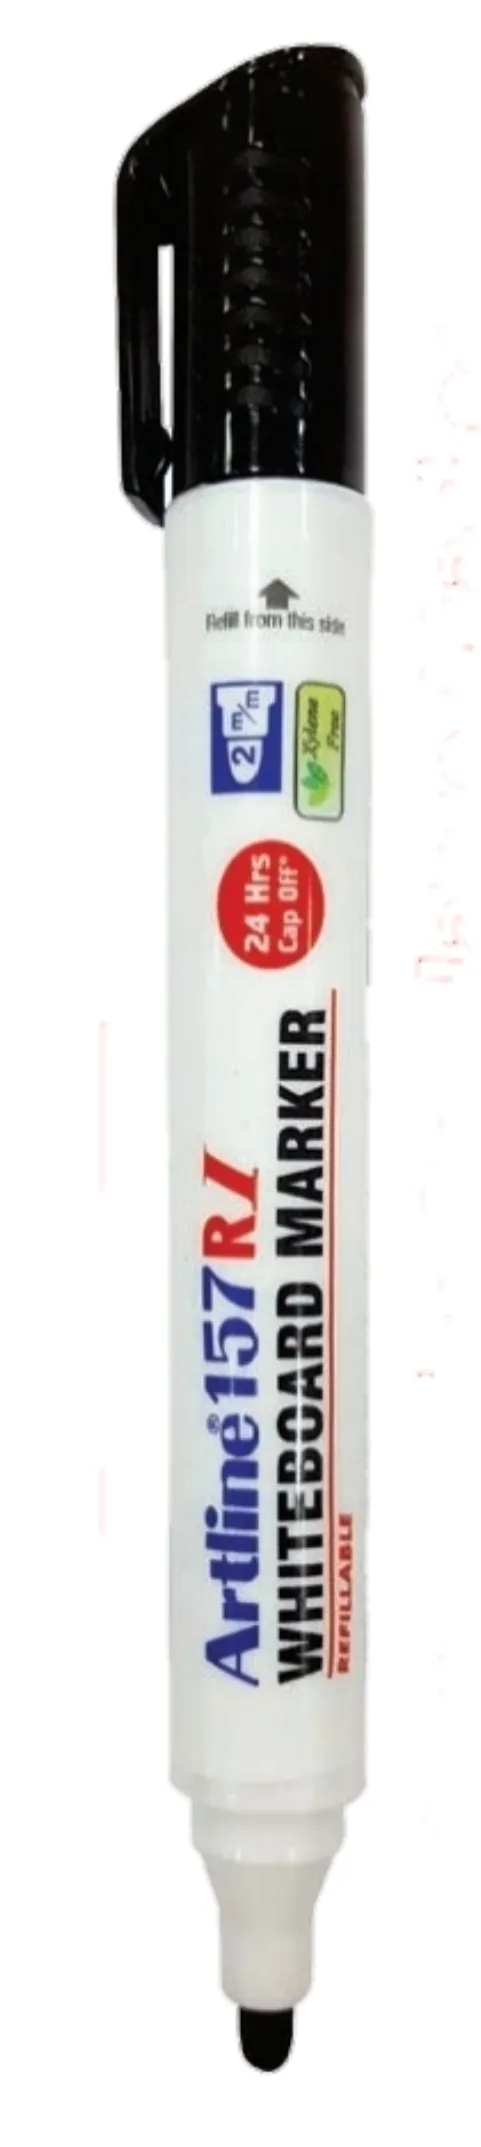 Artline White Board Marker 157 RI Refillable Black Colour Pack of 1 Marker